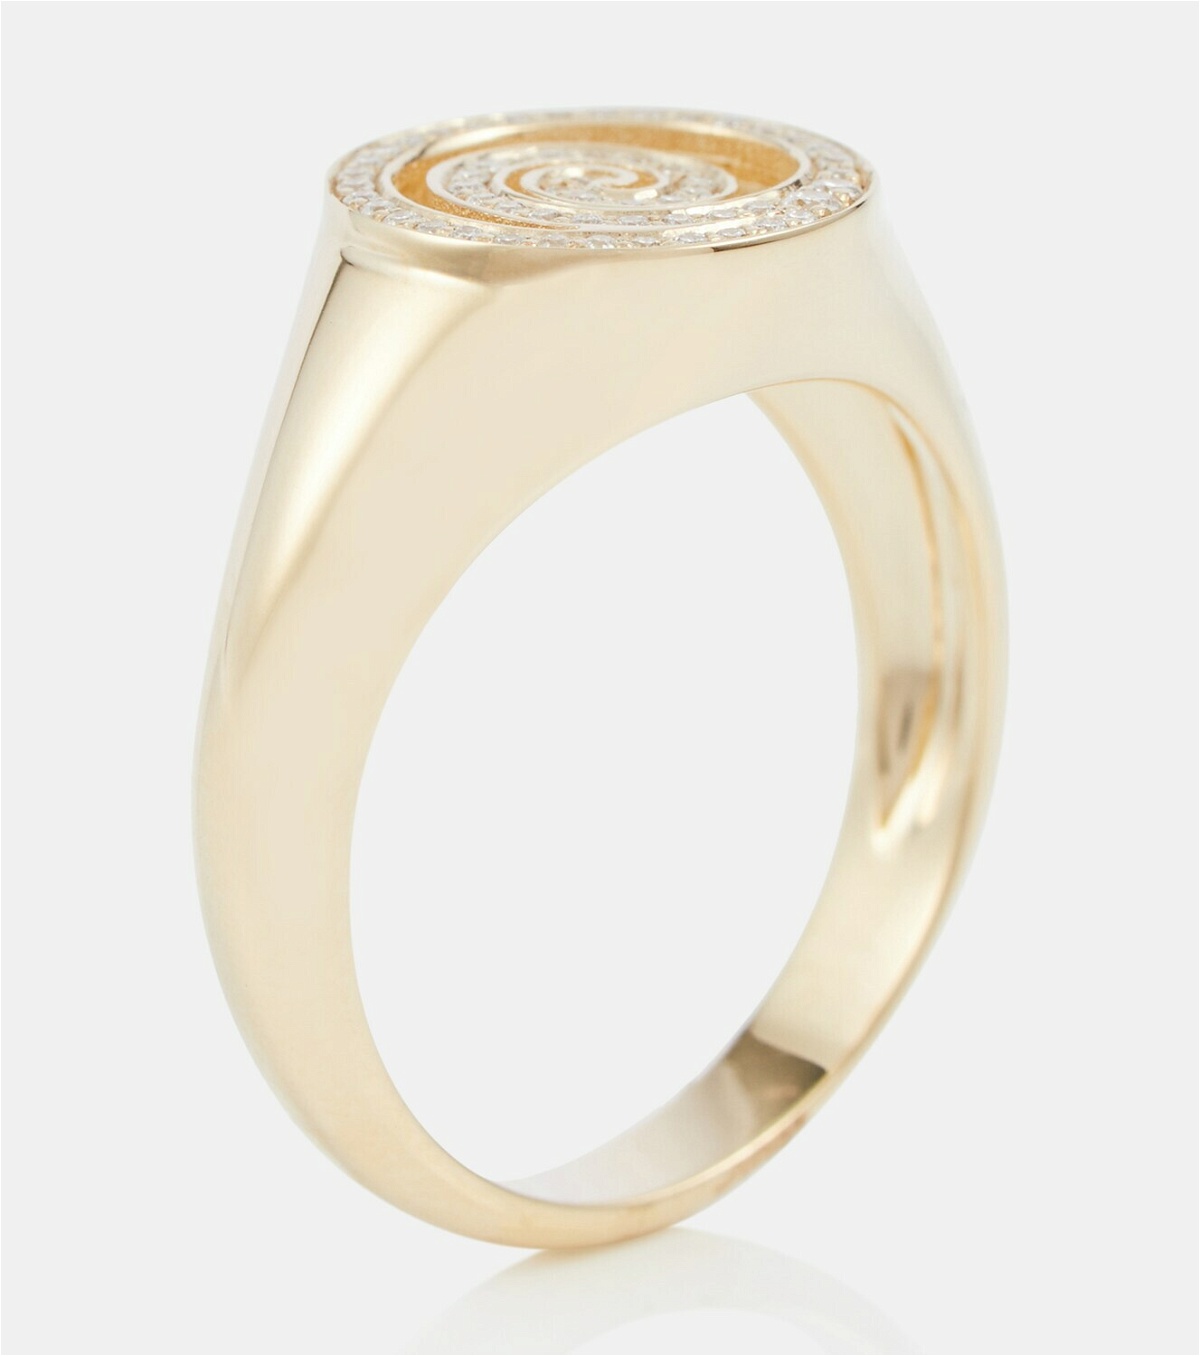 Sydney Evan Nautilus Spiral 14kt gold signet ring with white diamonds